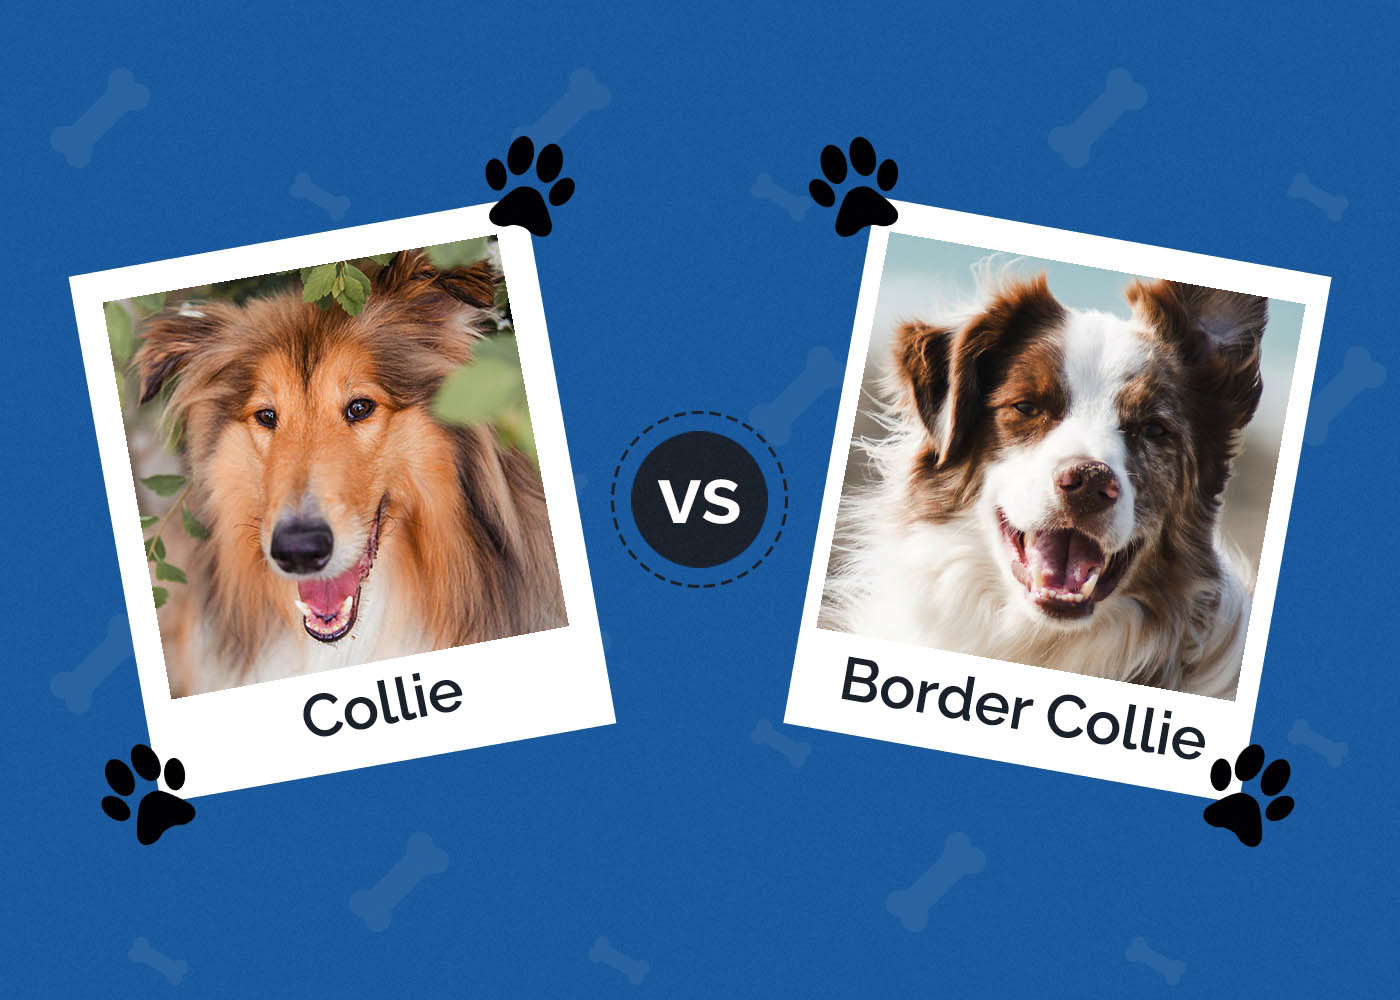 Collie vs Border Collie